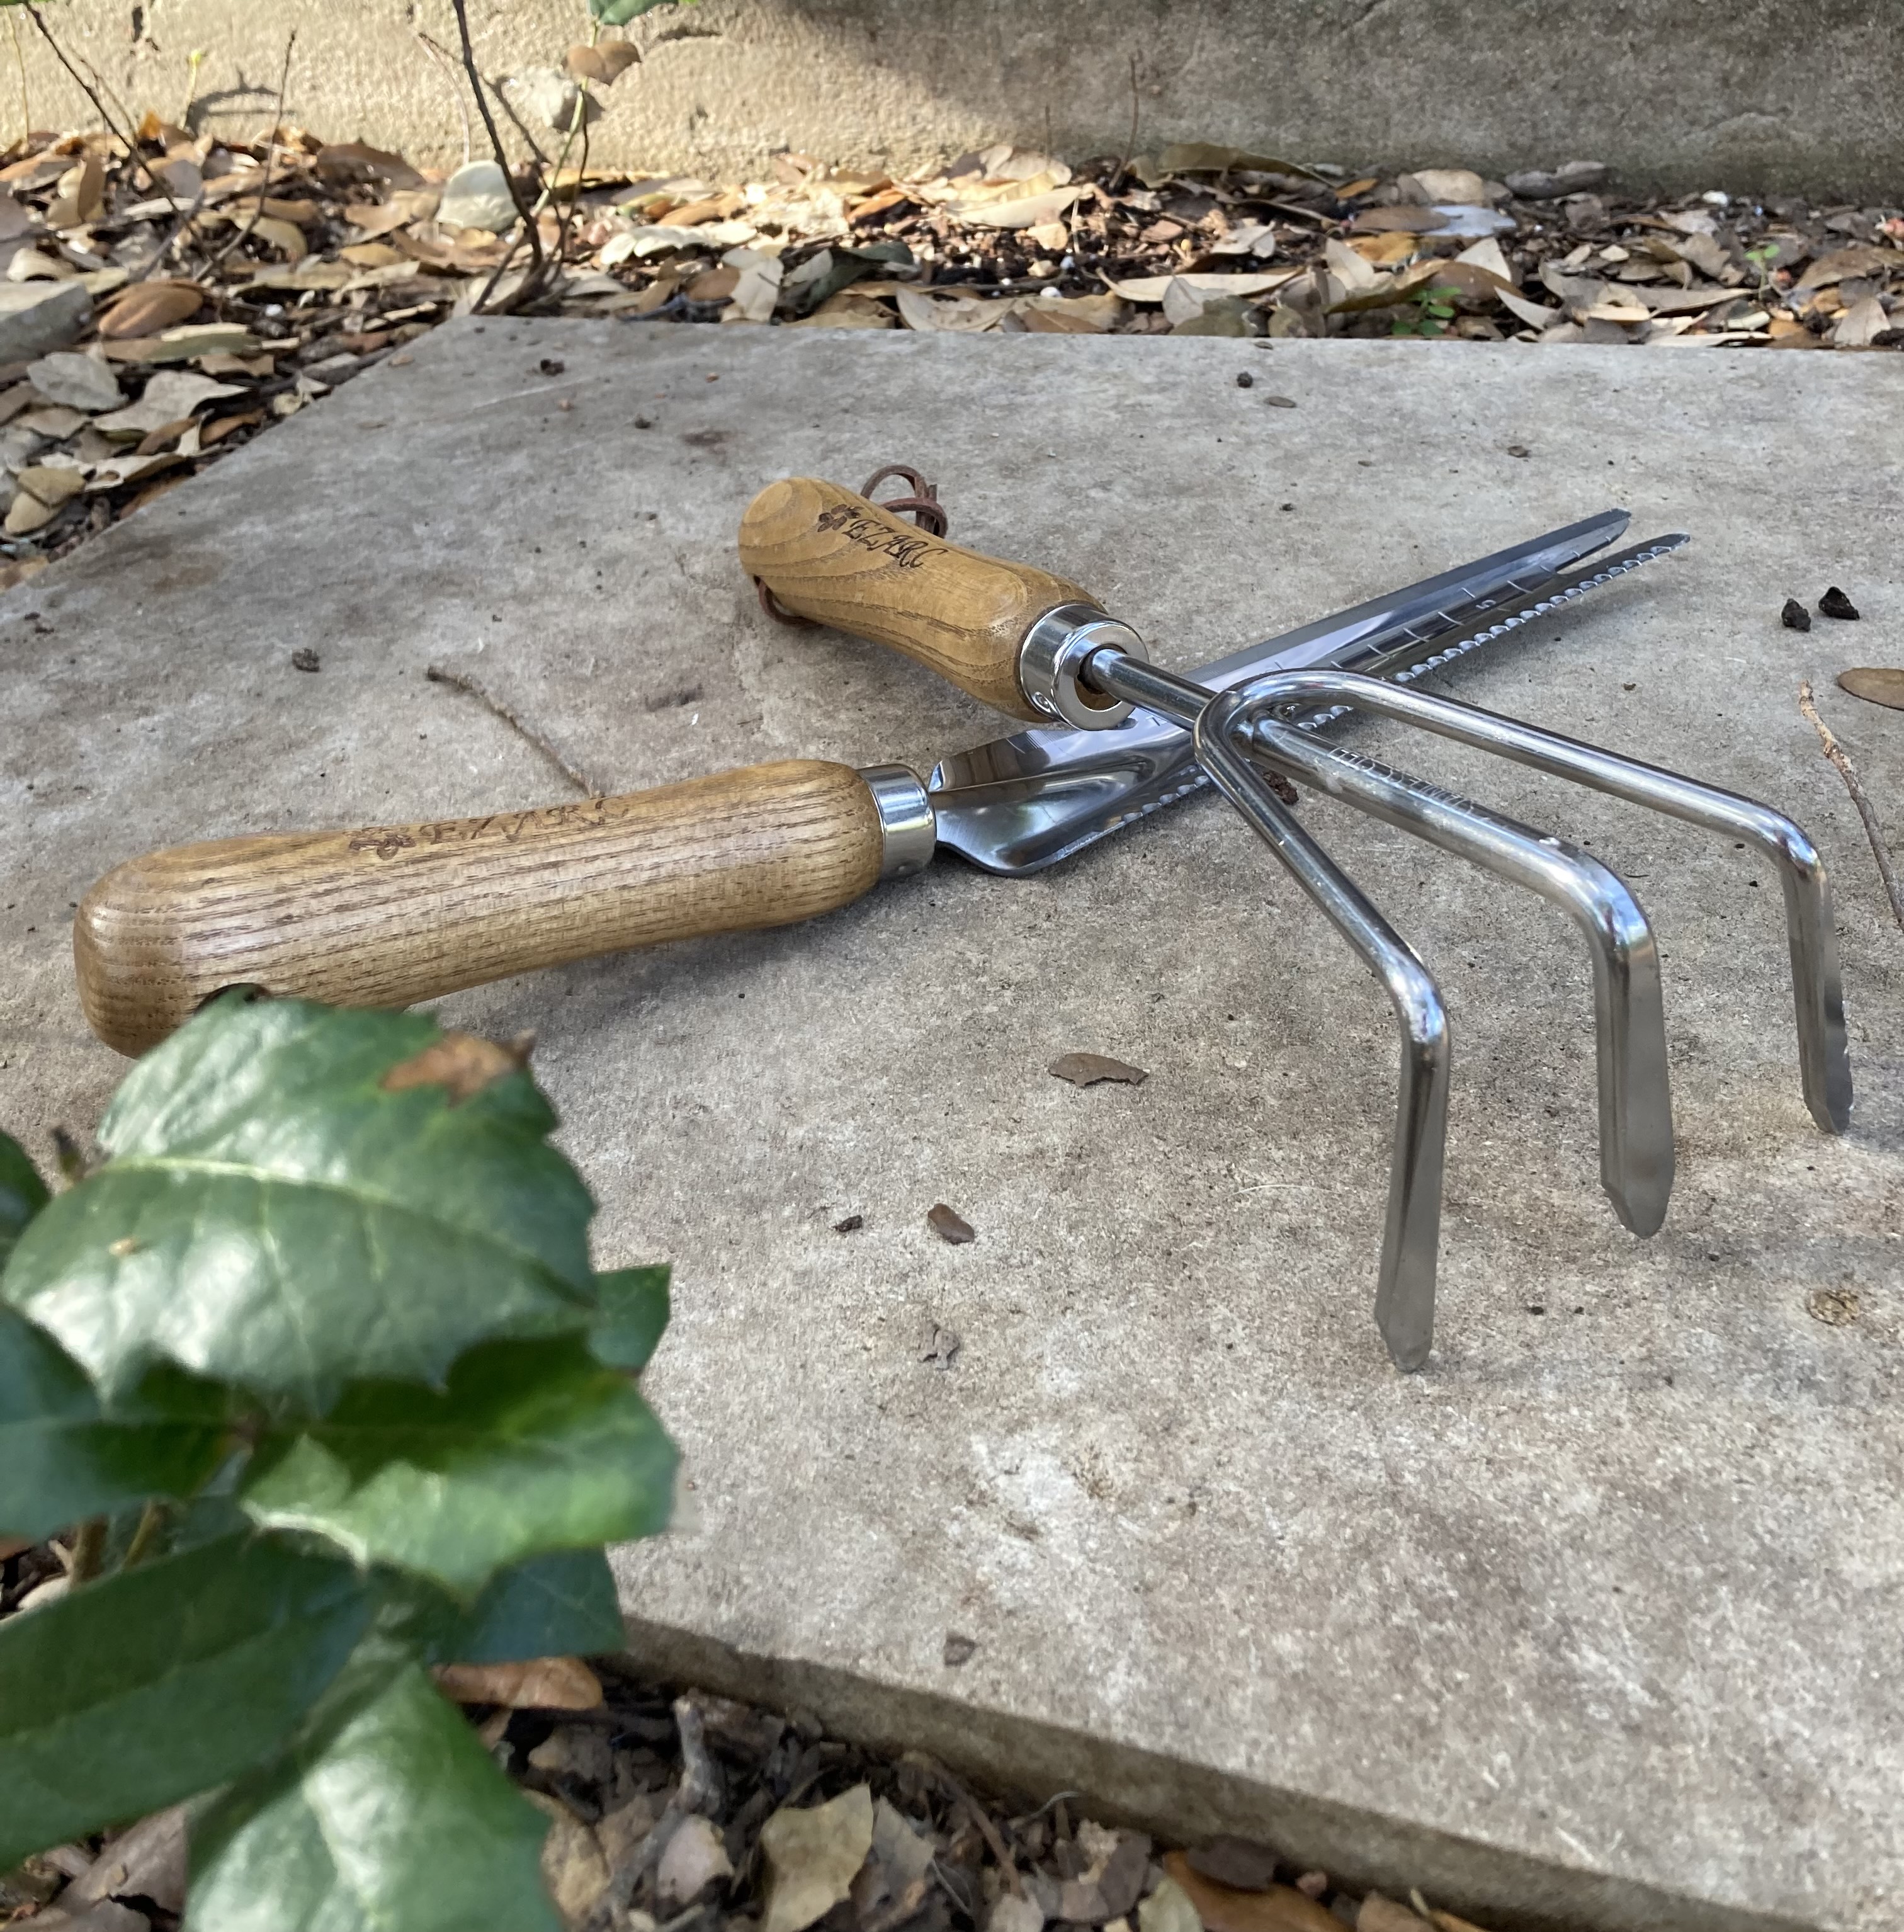 Hand garden tools crossed on pavement